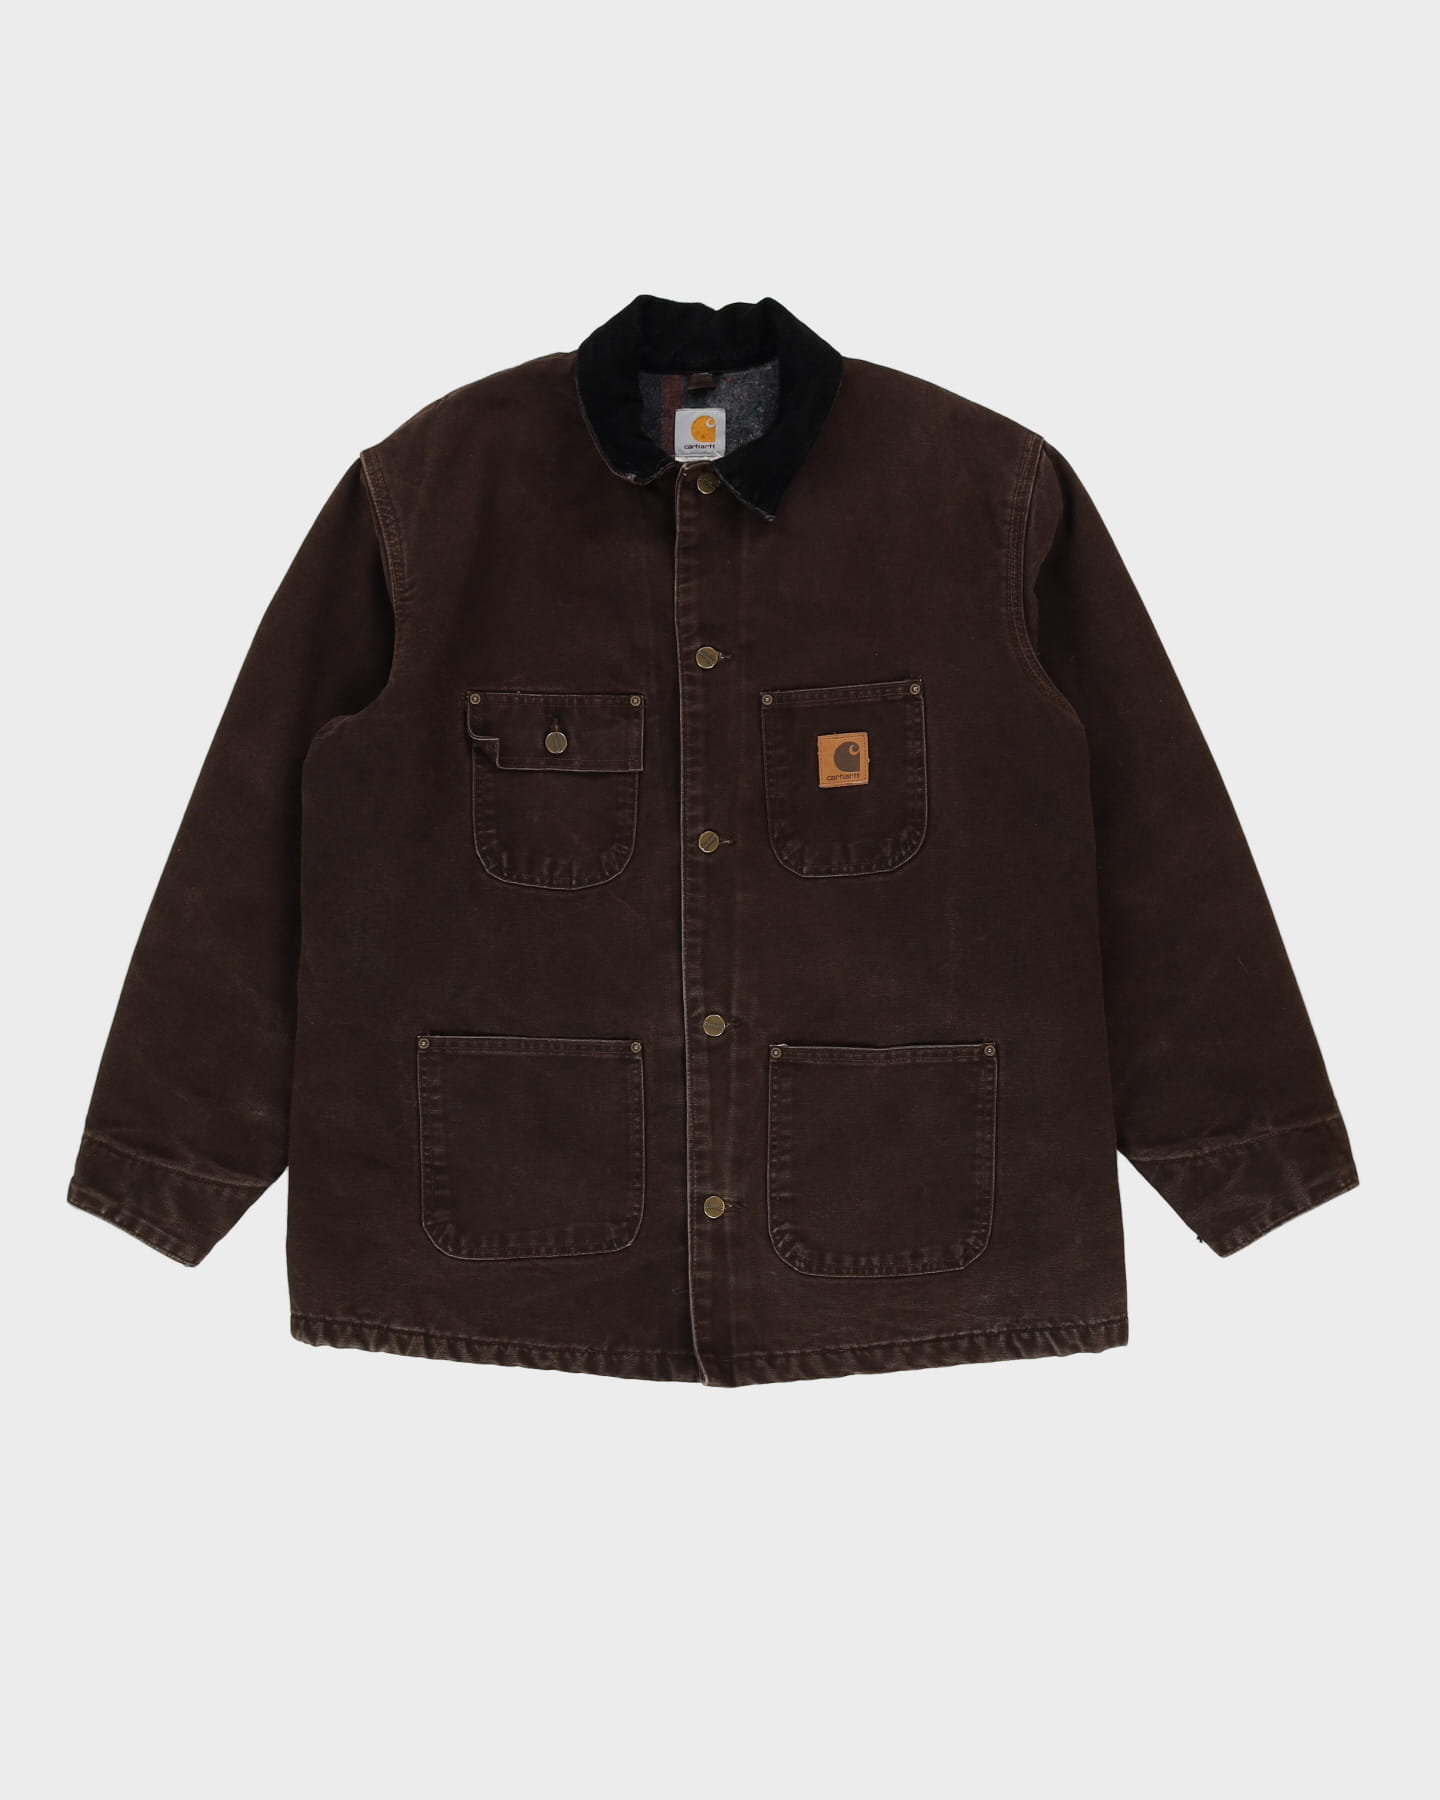 00s Carhartt Brown Workwear / Chore Jacket - L